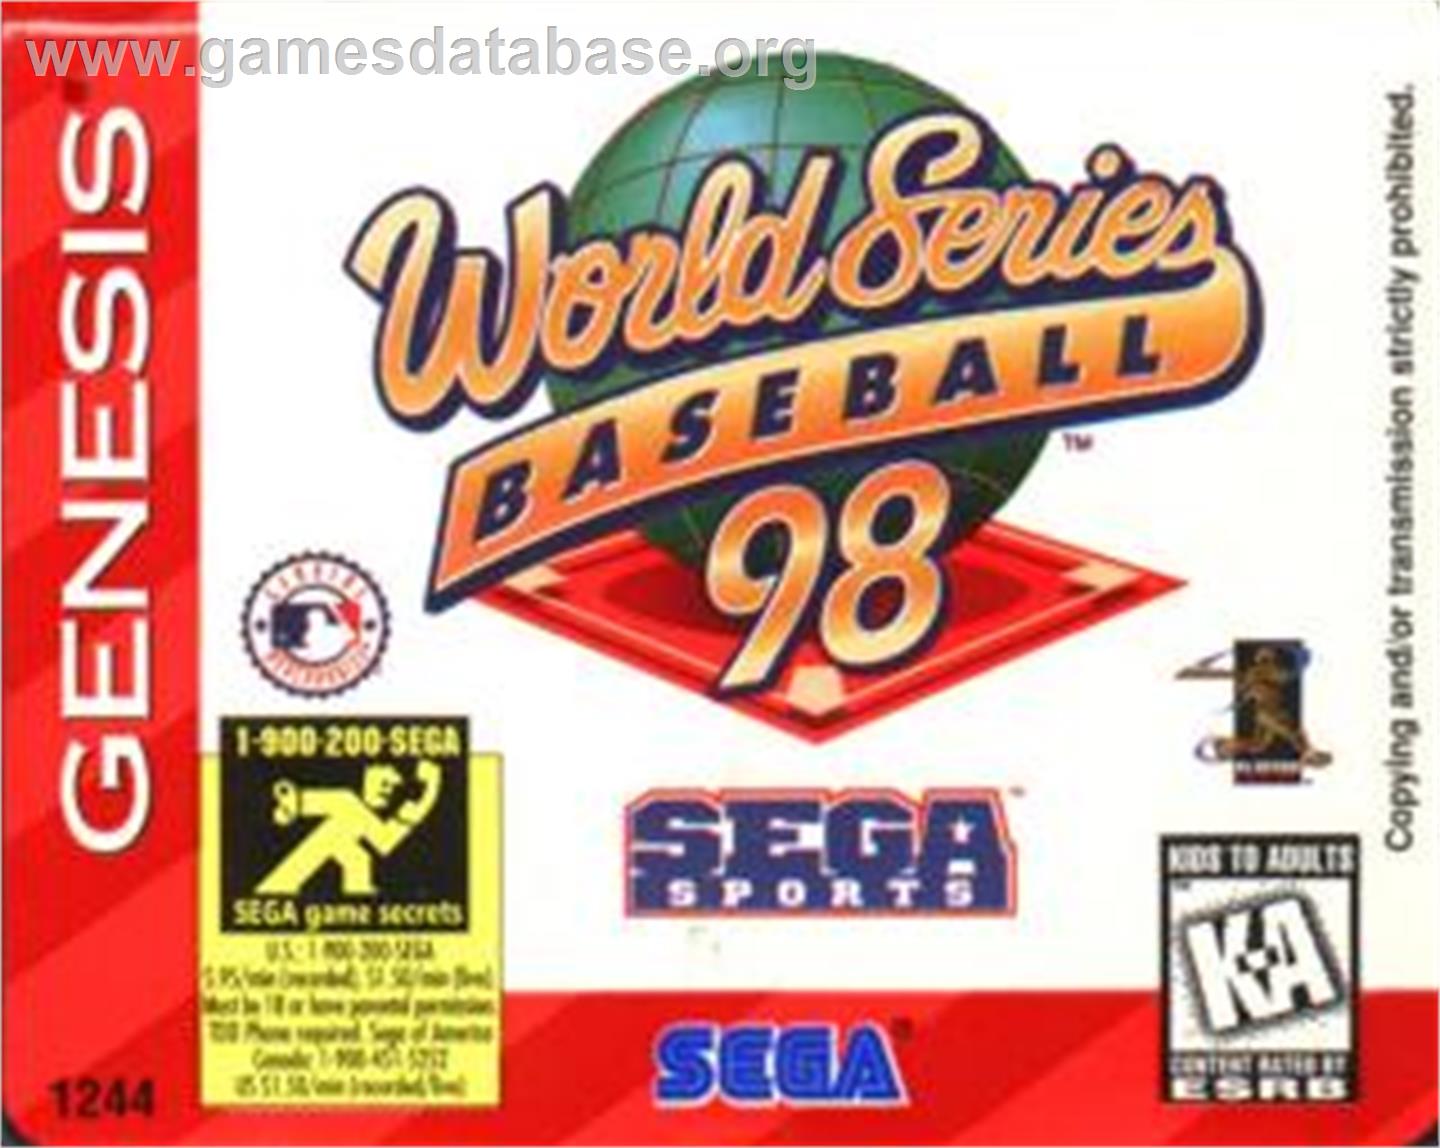 World Series Baseball '98 - Sega Nomad - Artwork - Cartridge